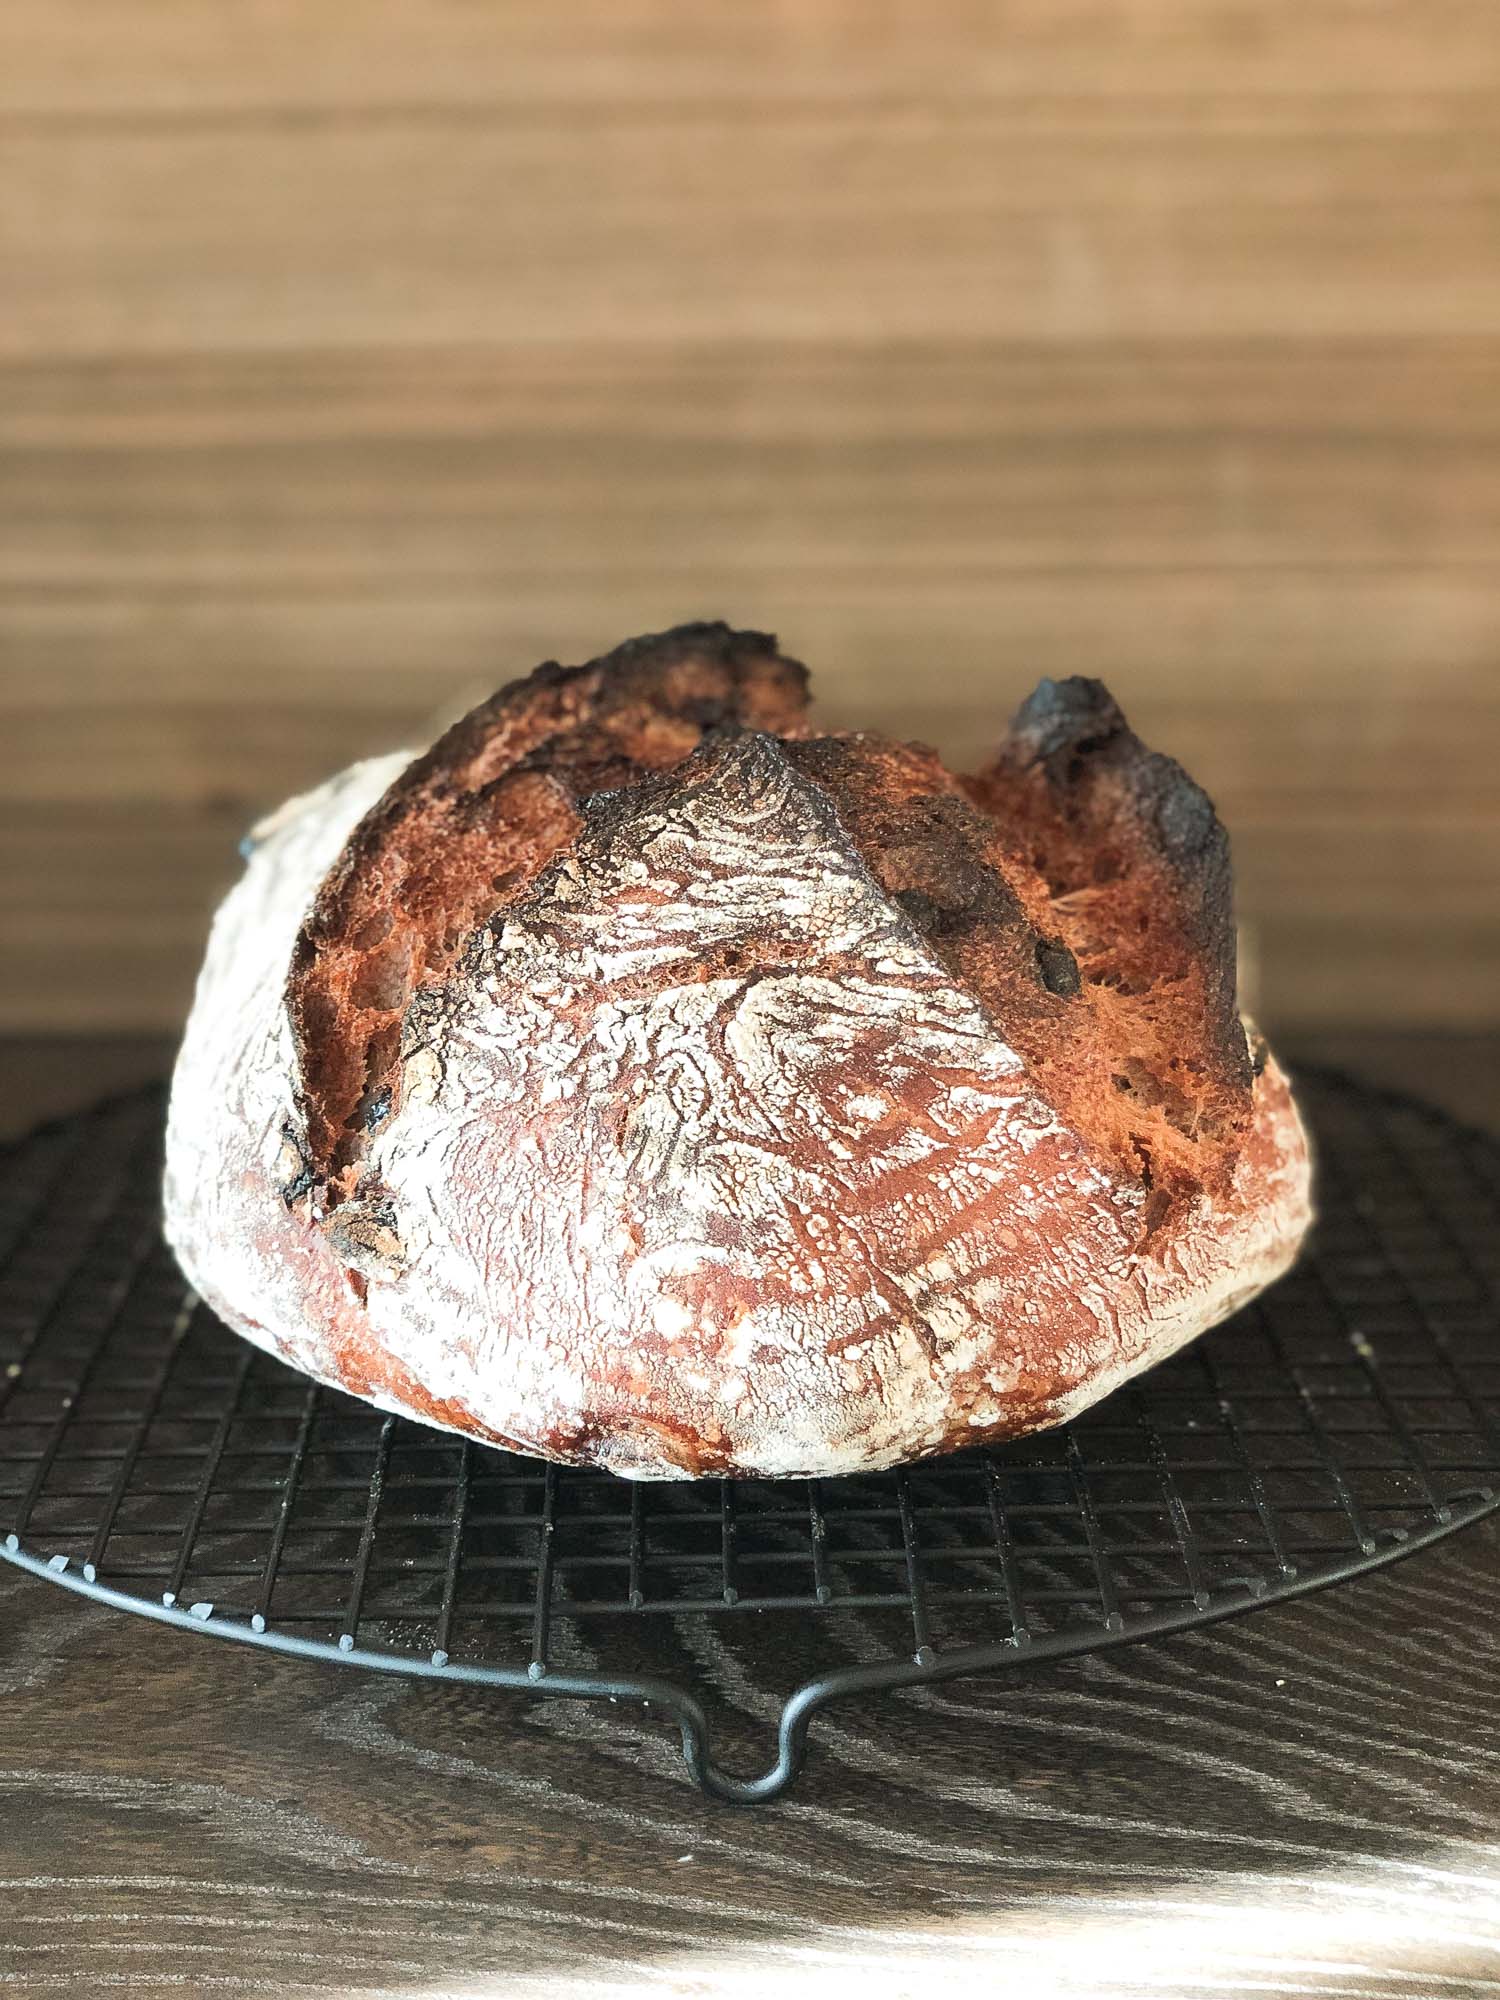 https://lemonsandanchovies.com/wp-content/uploads/2019/04/Sourdough-Bread-with-Unfed-Starter-7.jpg